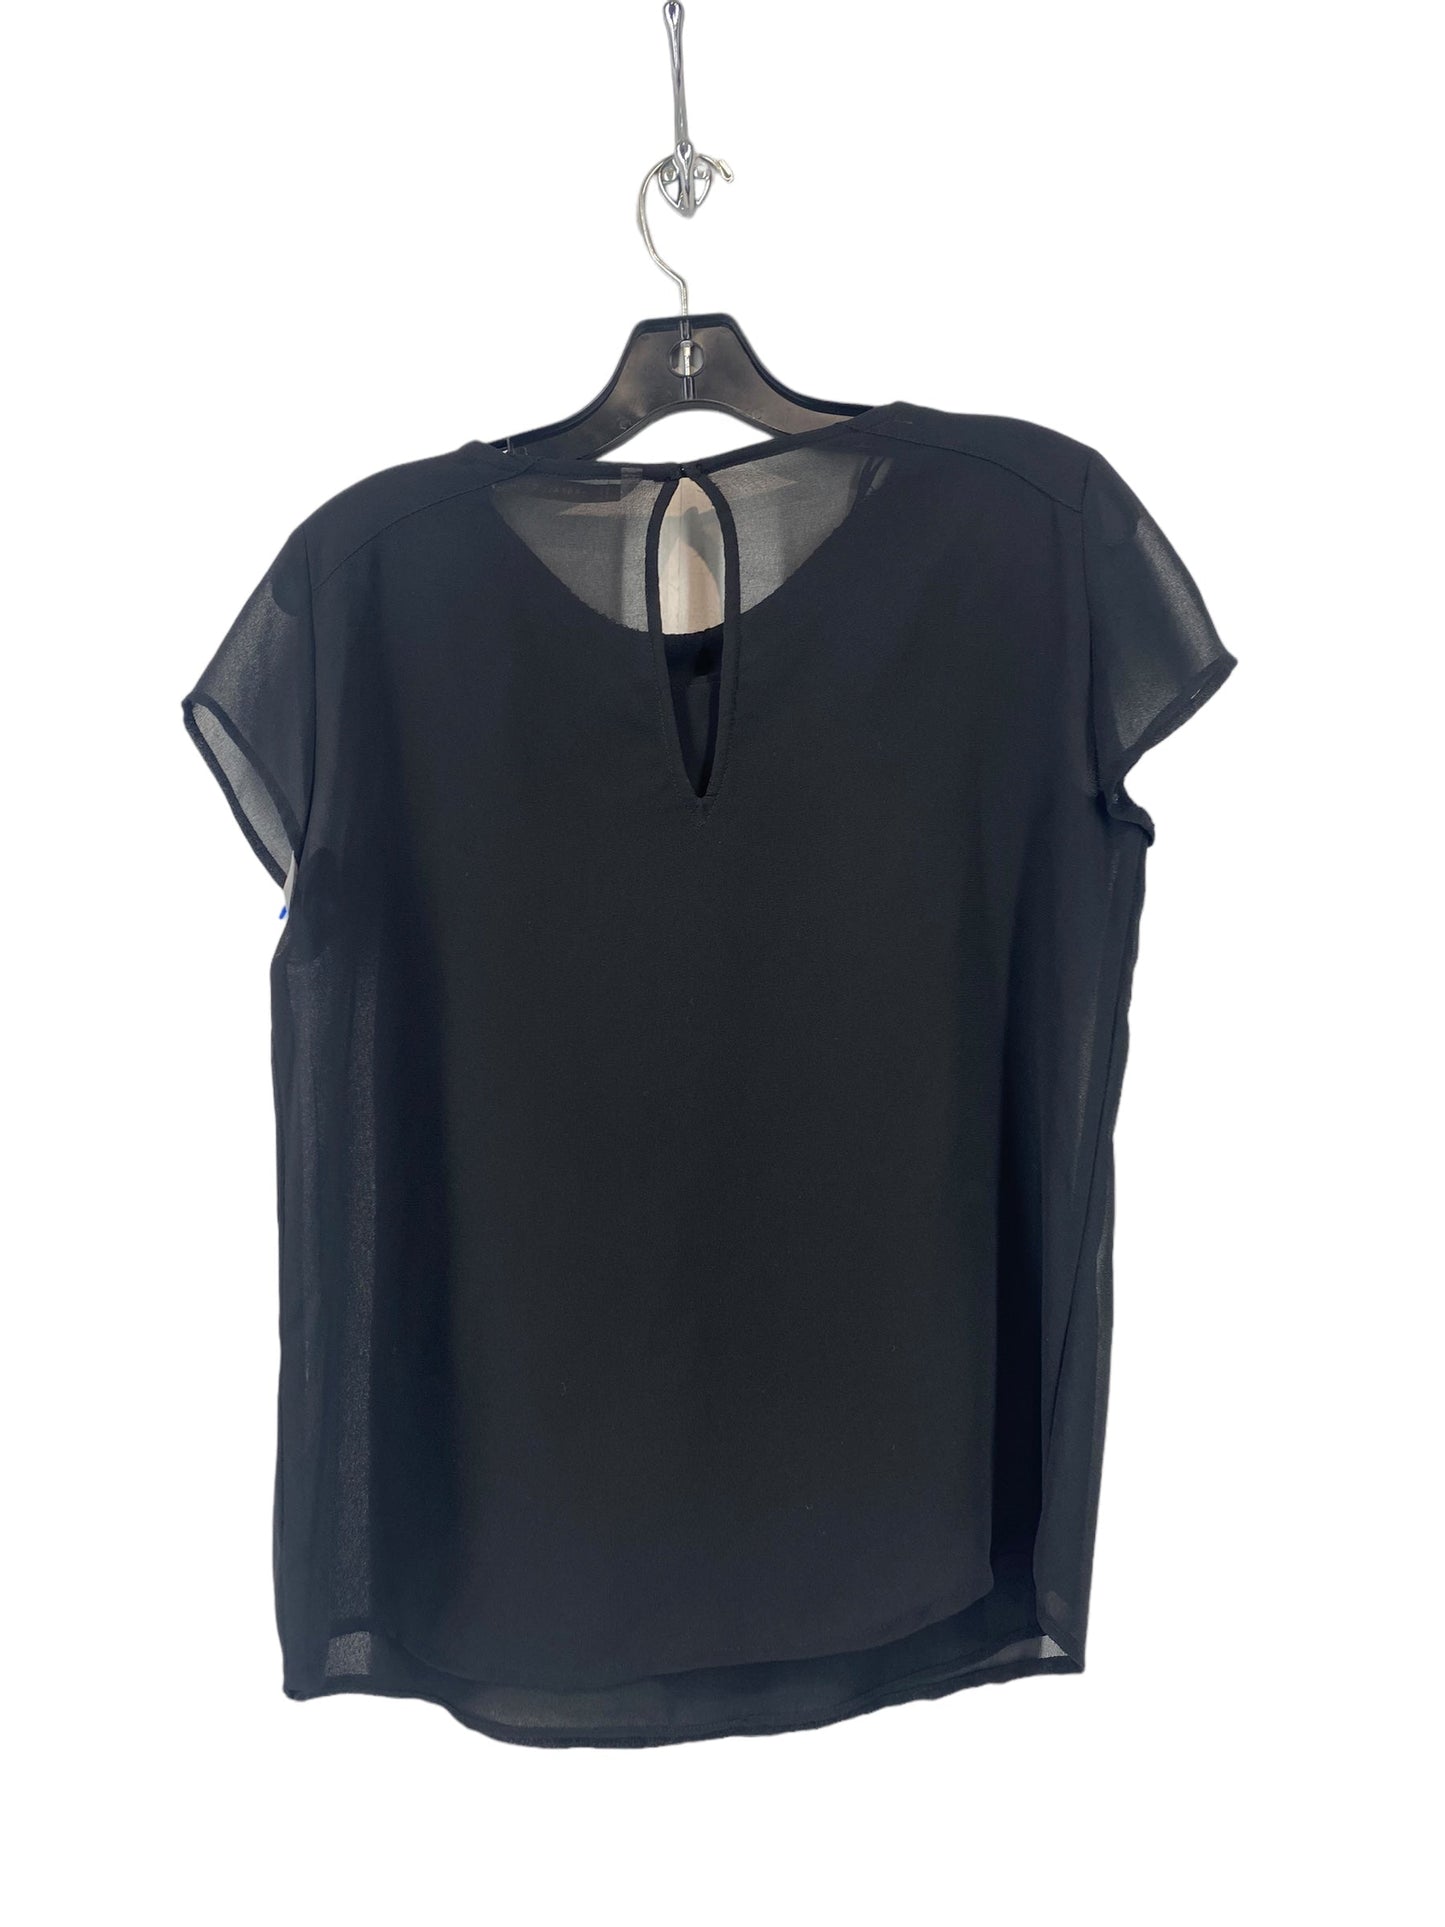 Black Top Short Sleeve Zara, Size M